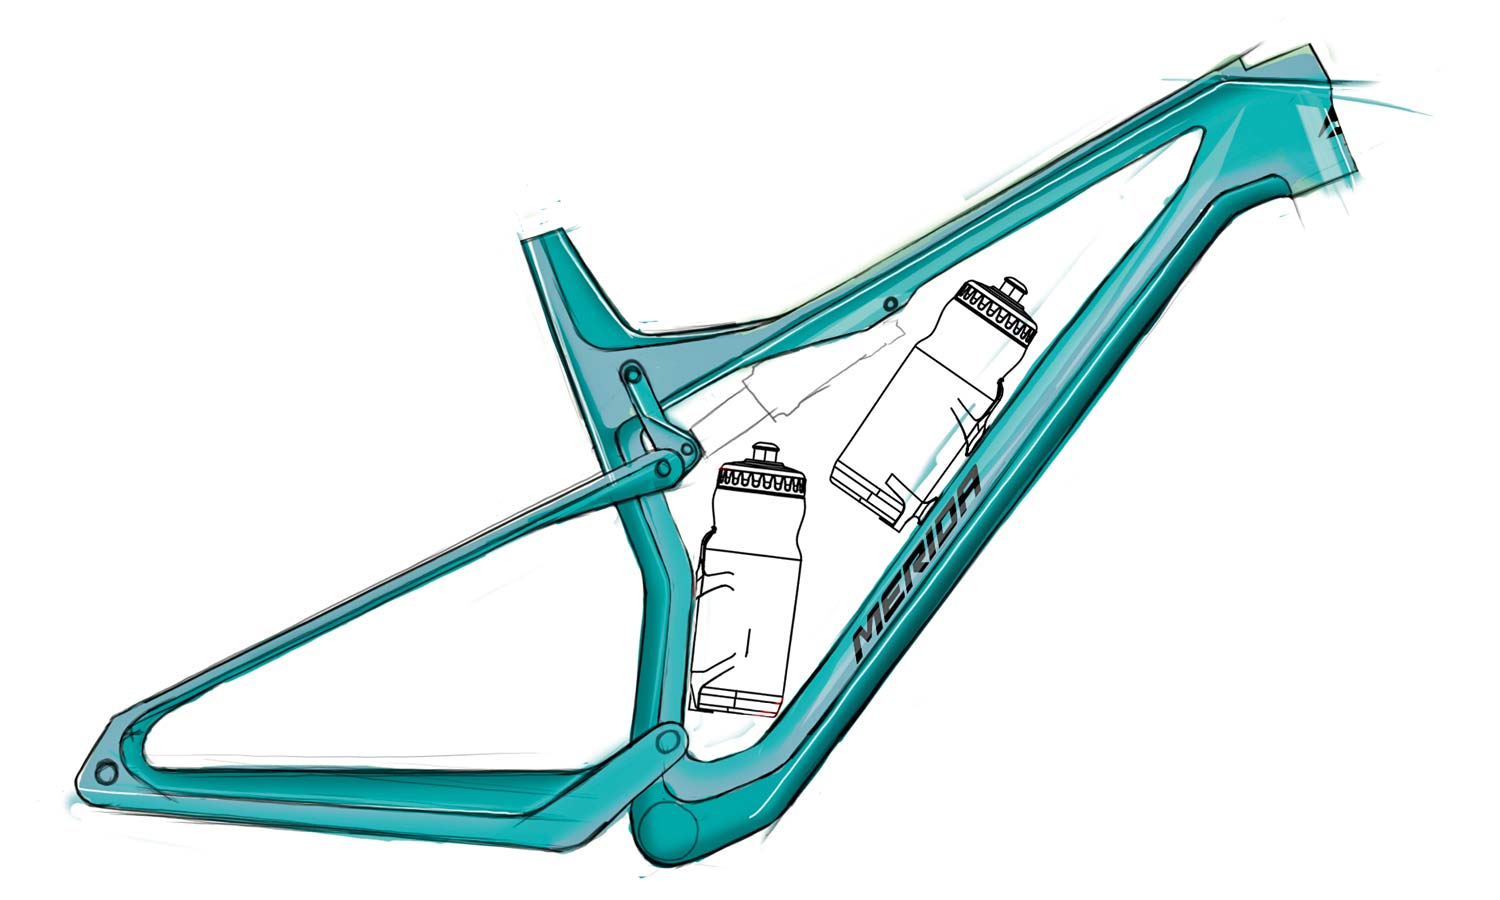 2021 Merida Ninety-Six XC mountain bike, lightweight carbon cross-country race OR light trail mountain bike, frame sketch